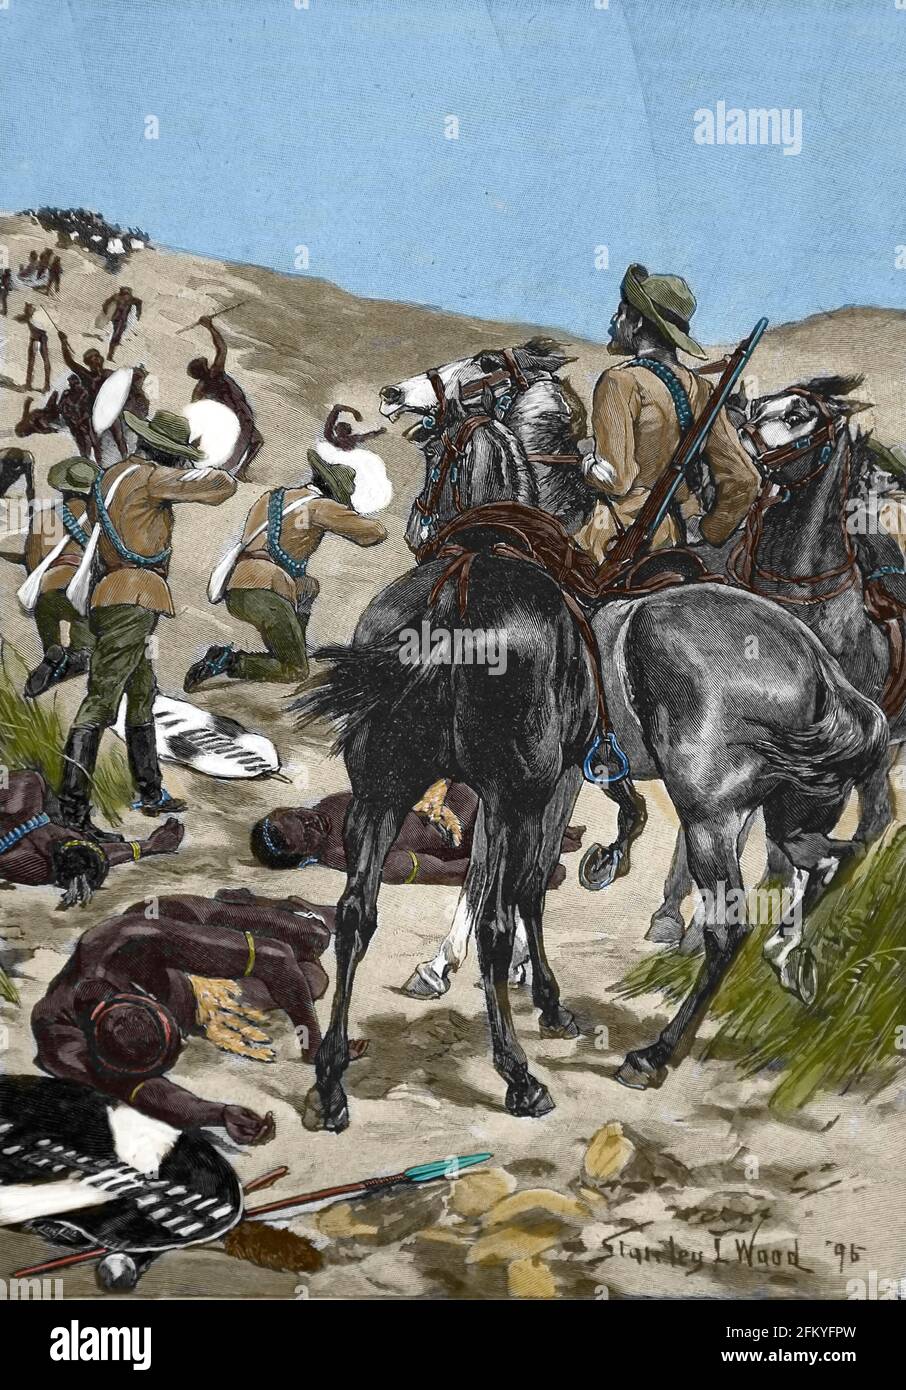 Anglo-Zulu War between the British Empire and the Zulu Kingdom, 1879. Combat. Iberian Illustration, 1898. Stock Photo